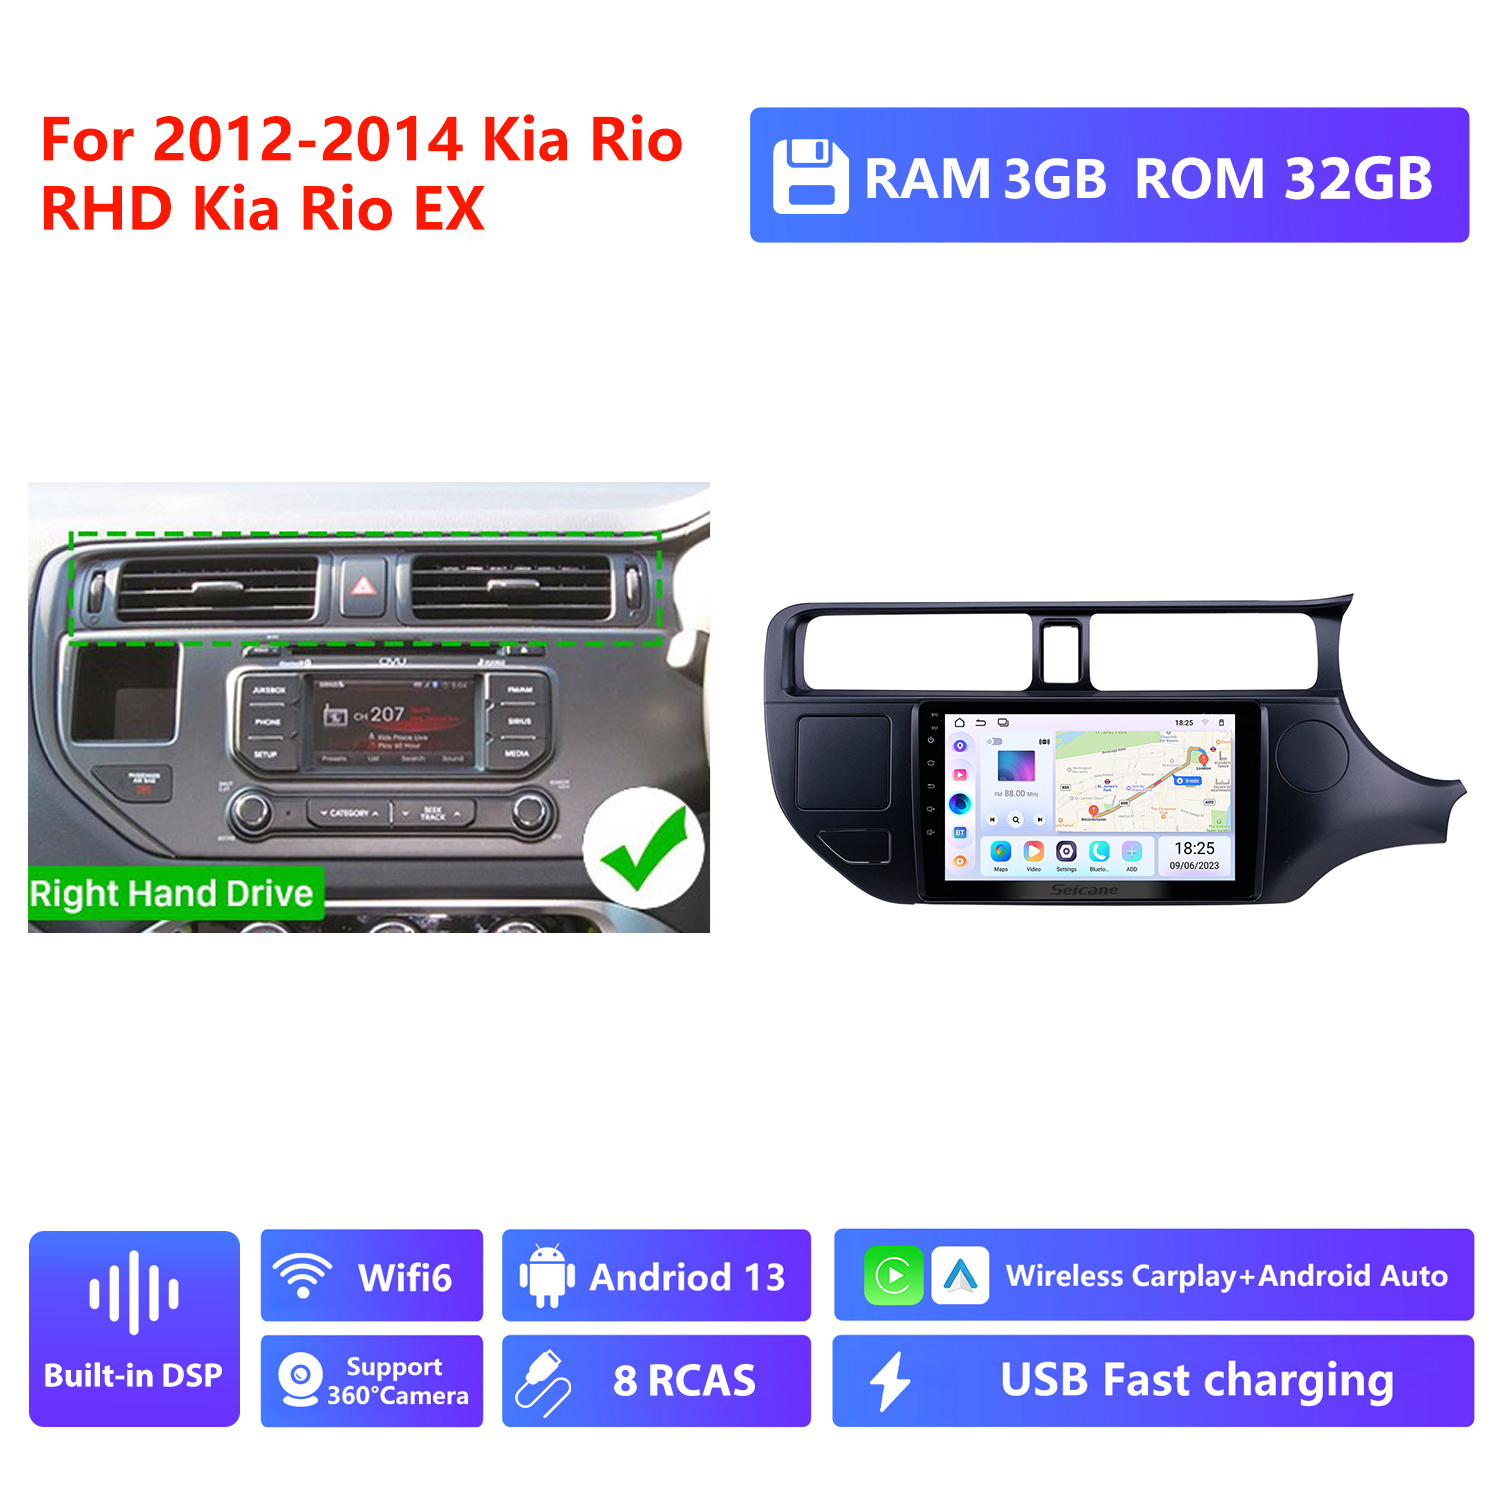 RAM 3G,ROM 32G,RHD